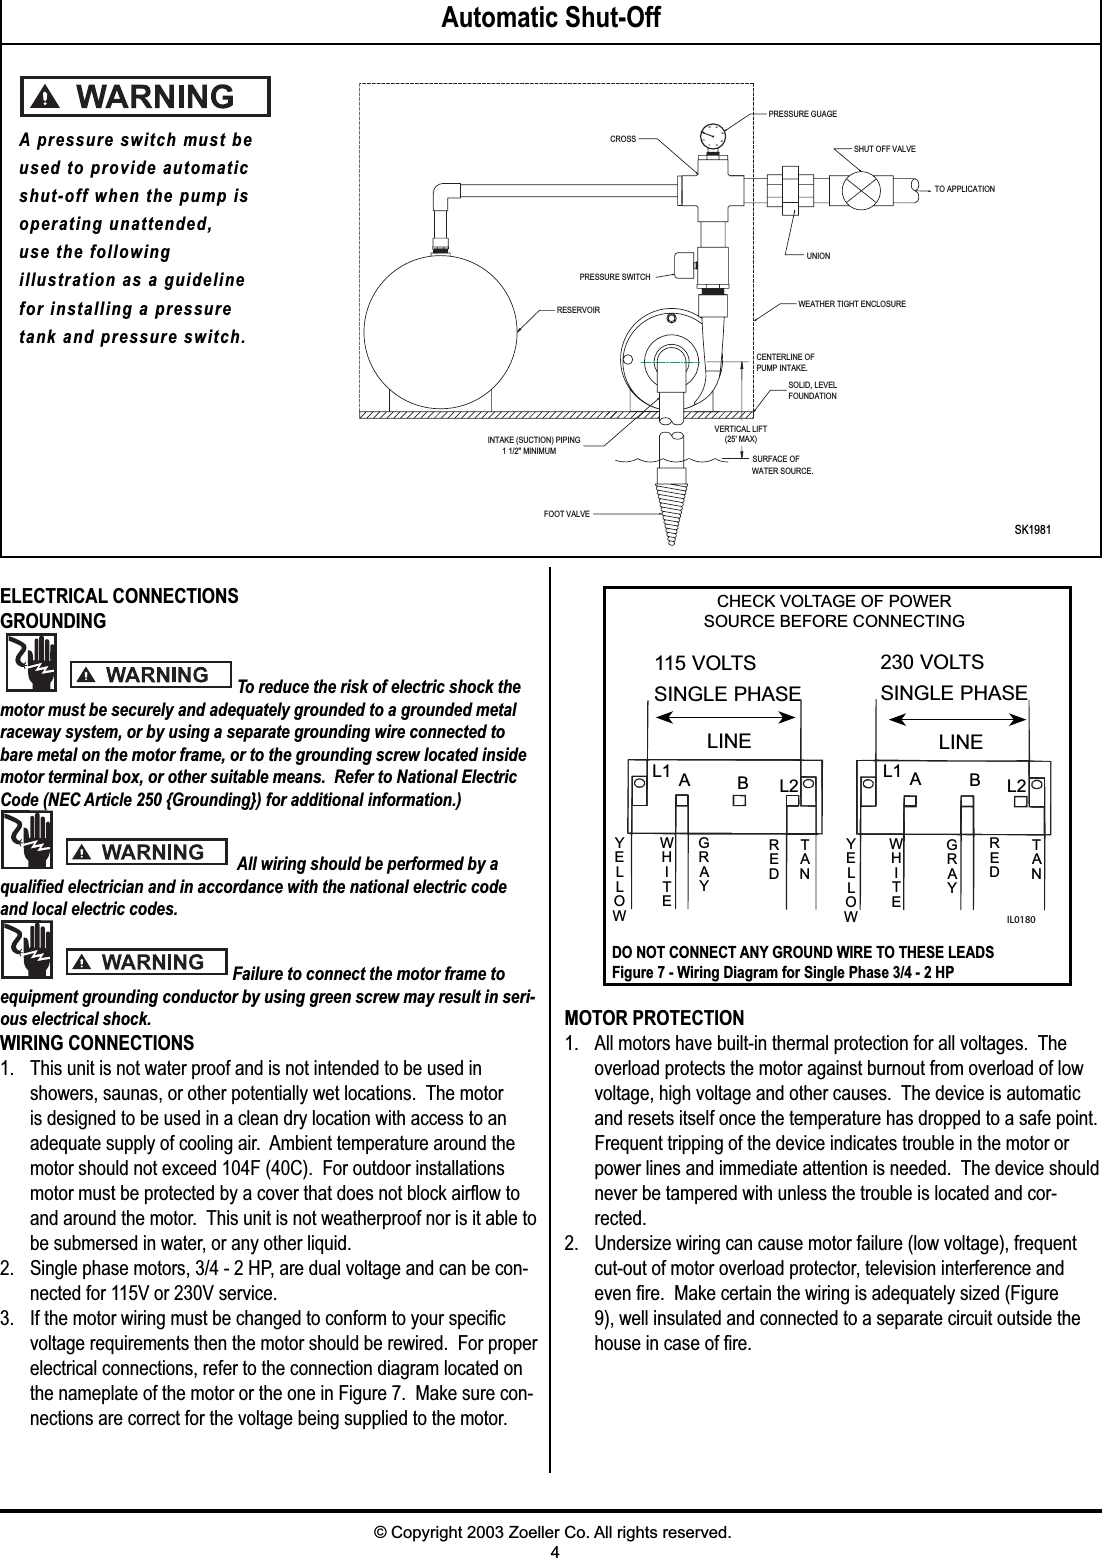 Page 4 of 8 - 537482 2 Zoeller Lawn Sprinkler Pump Installation Instructions 020293 Fm2101 User Manual